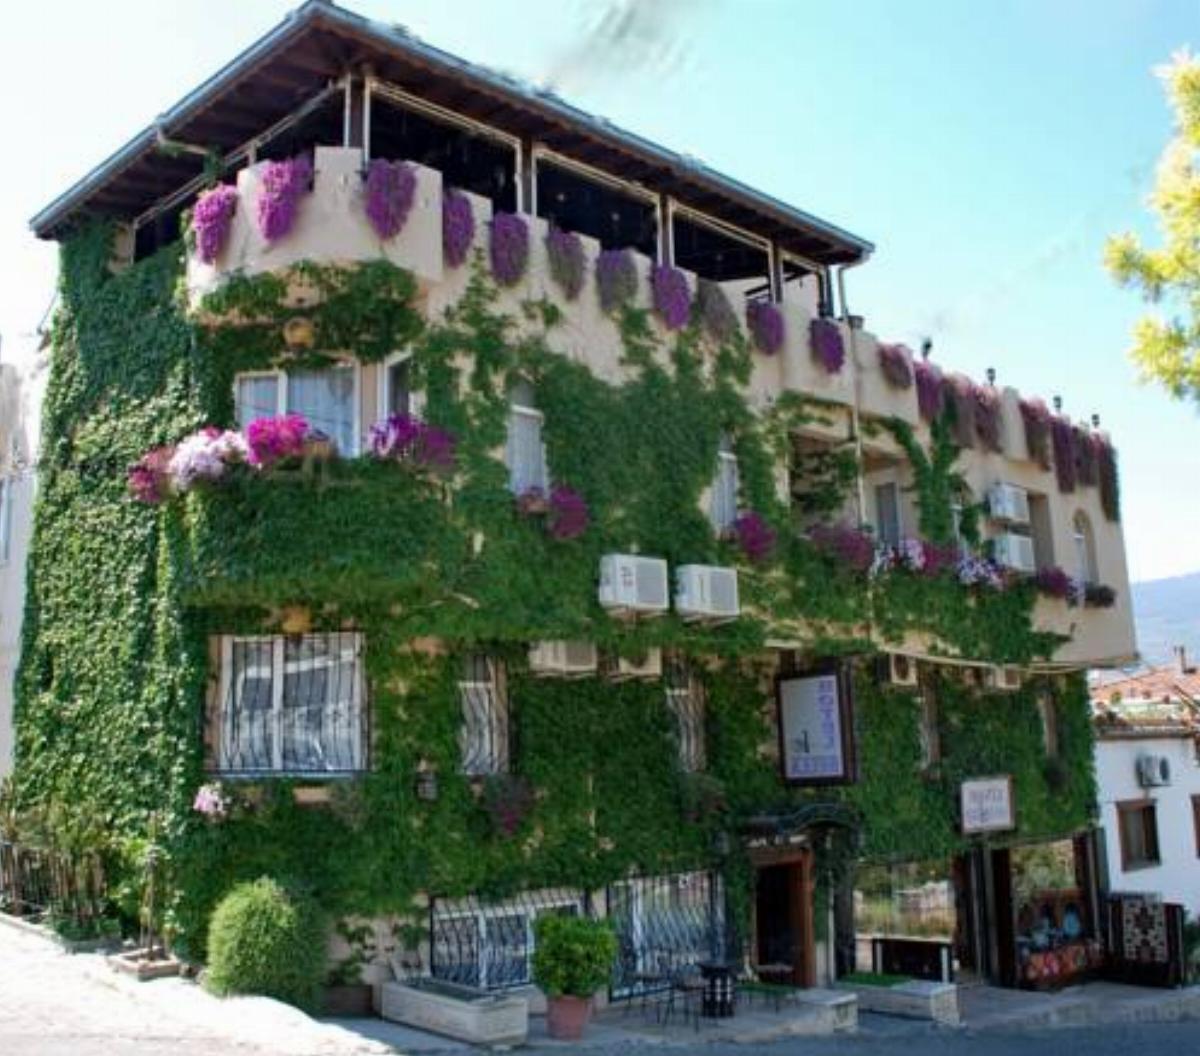 Bella Hotel Hotel Selcuk Turkey